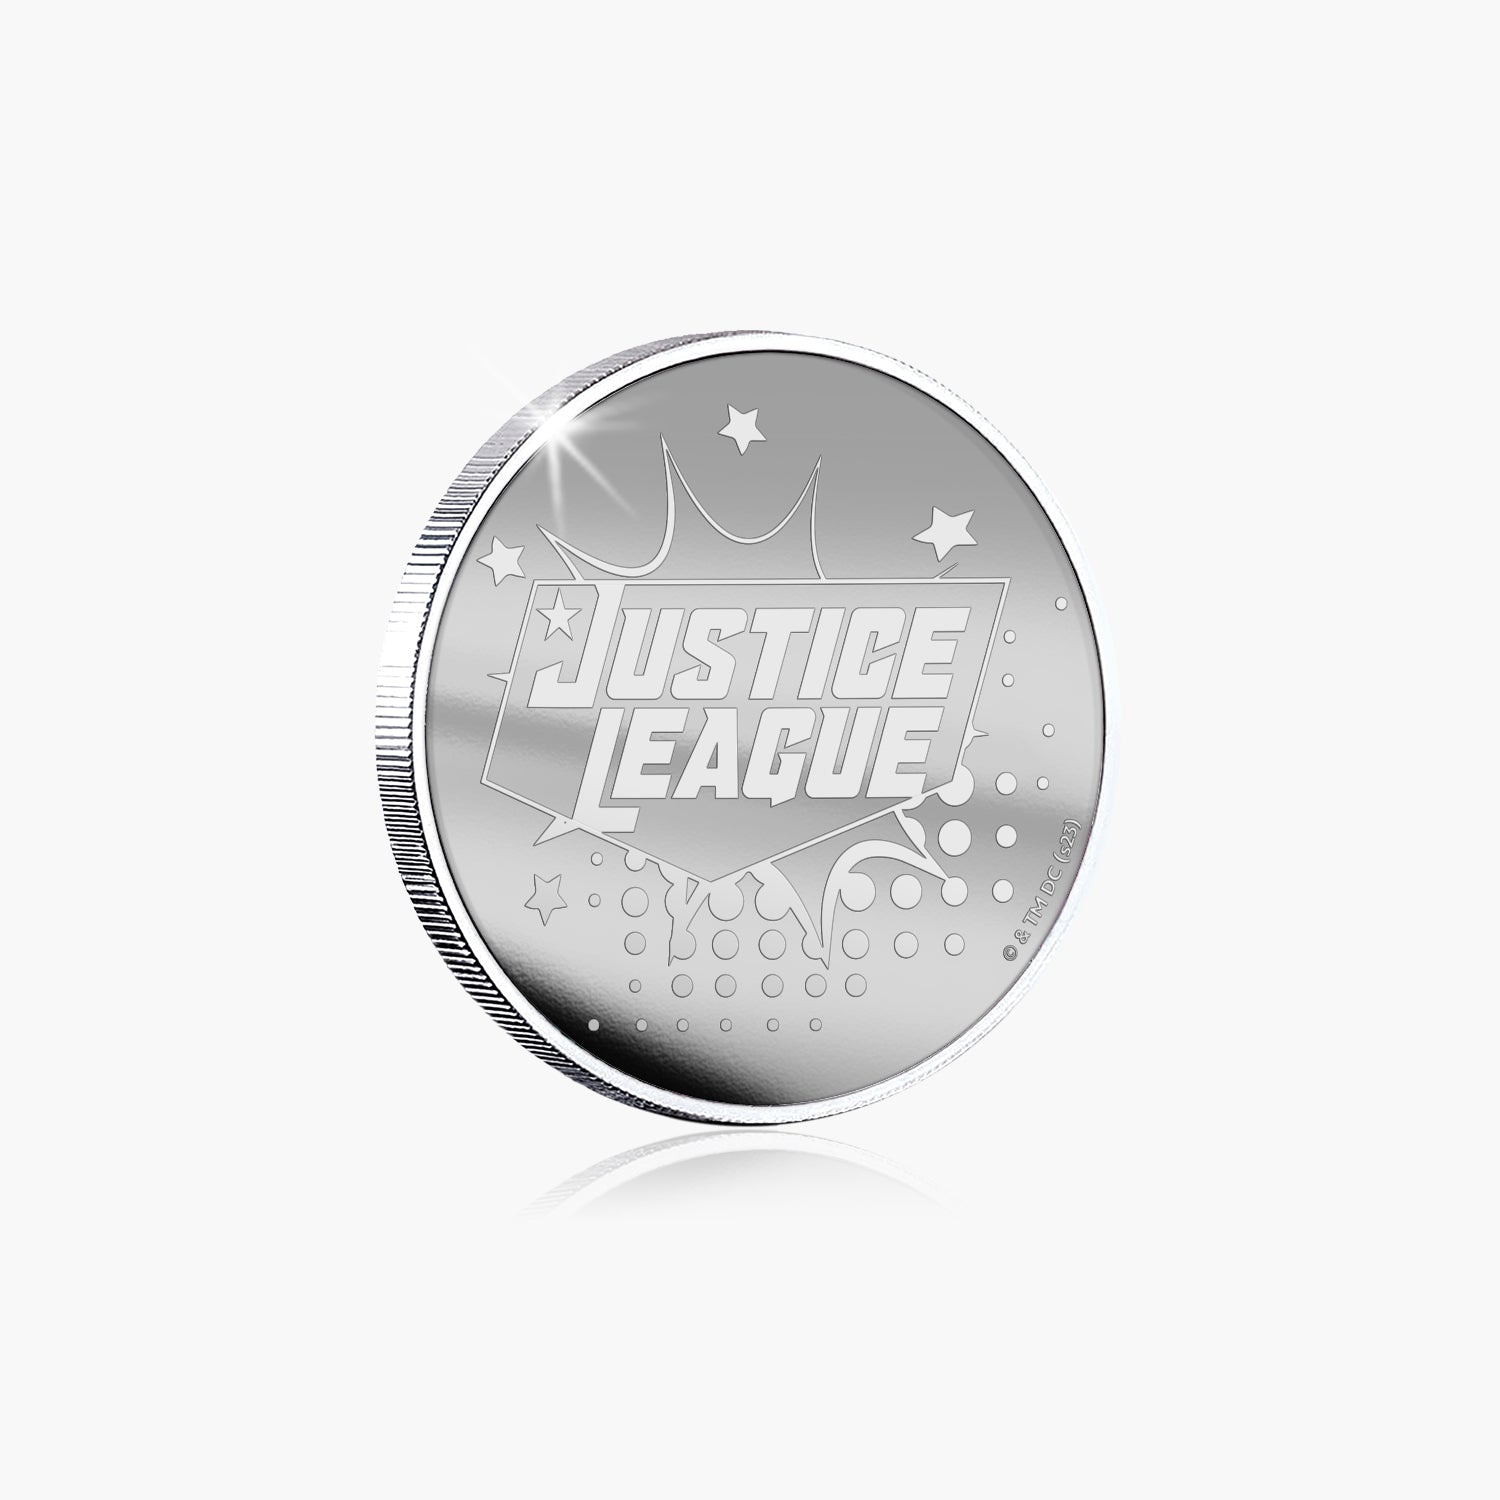 Justice League - Superman Silver Plated Commemorative